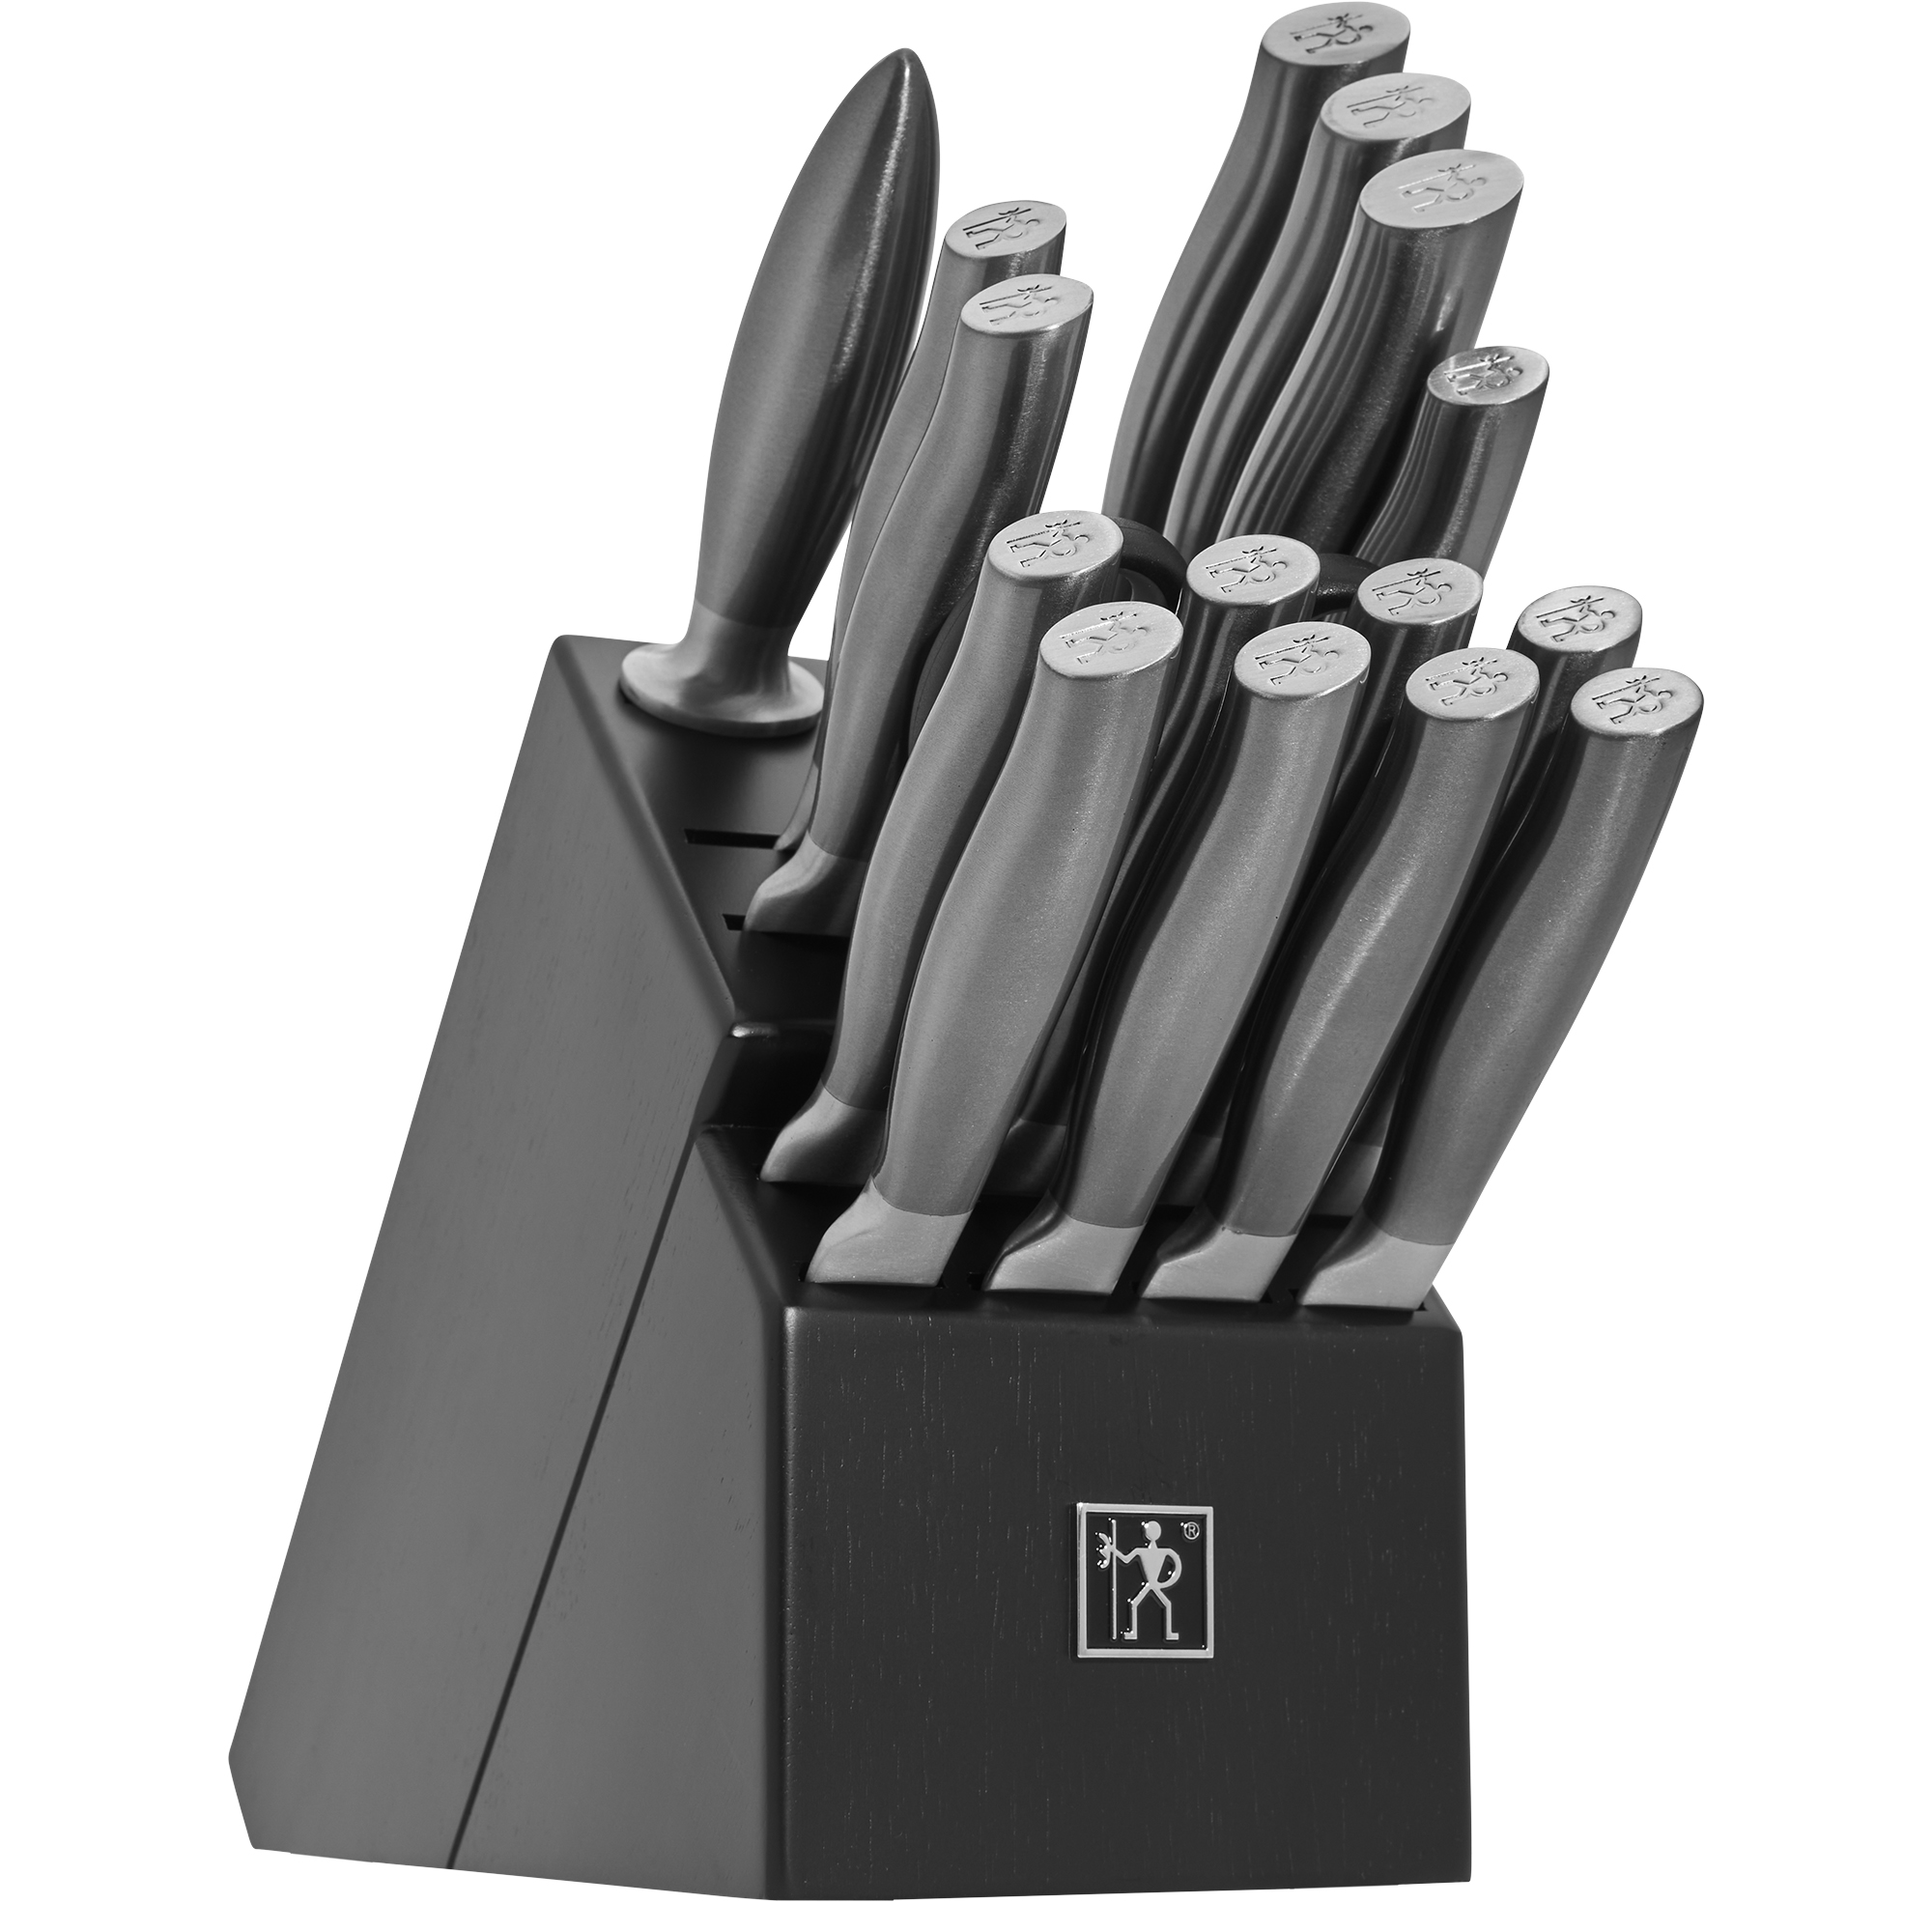 HENCKELS Graphite Stainless Steel 17-Piece Knife Block Set - image 1 of 7